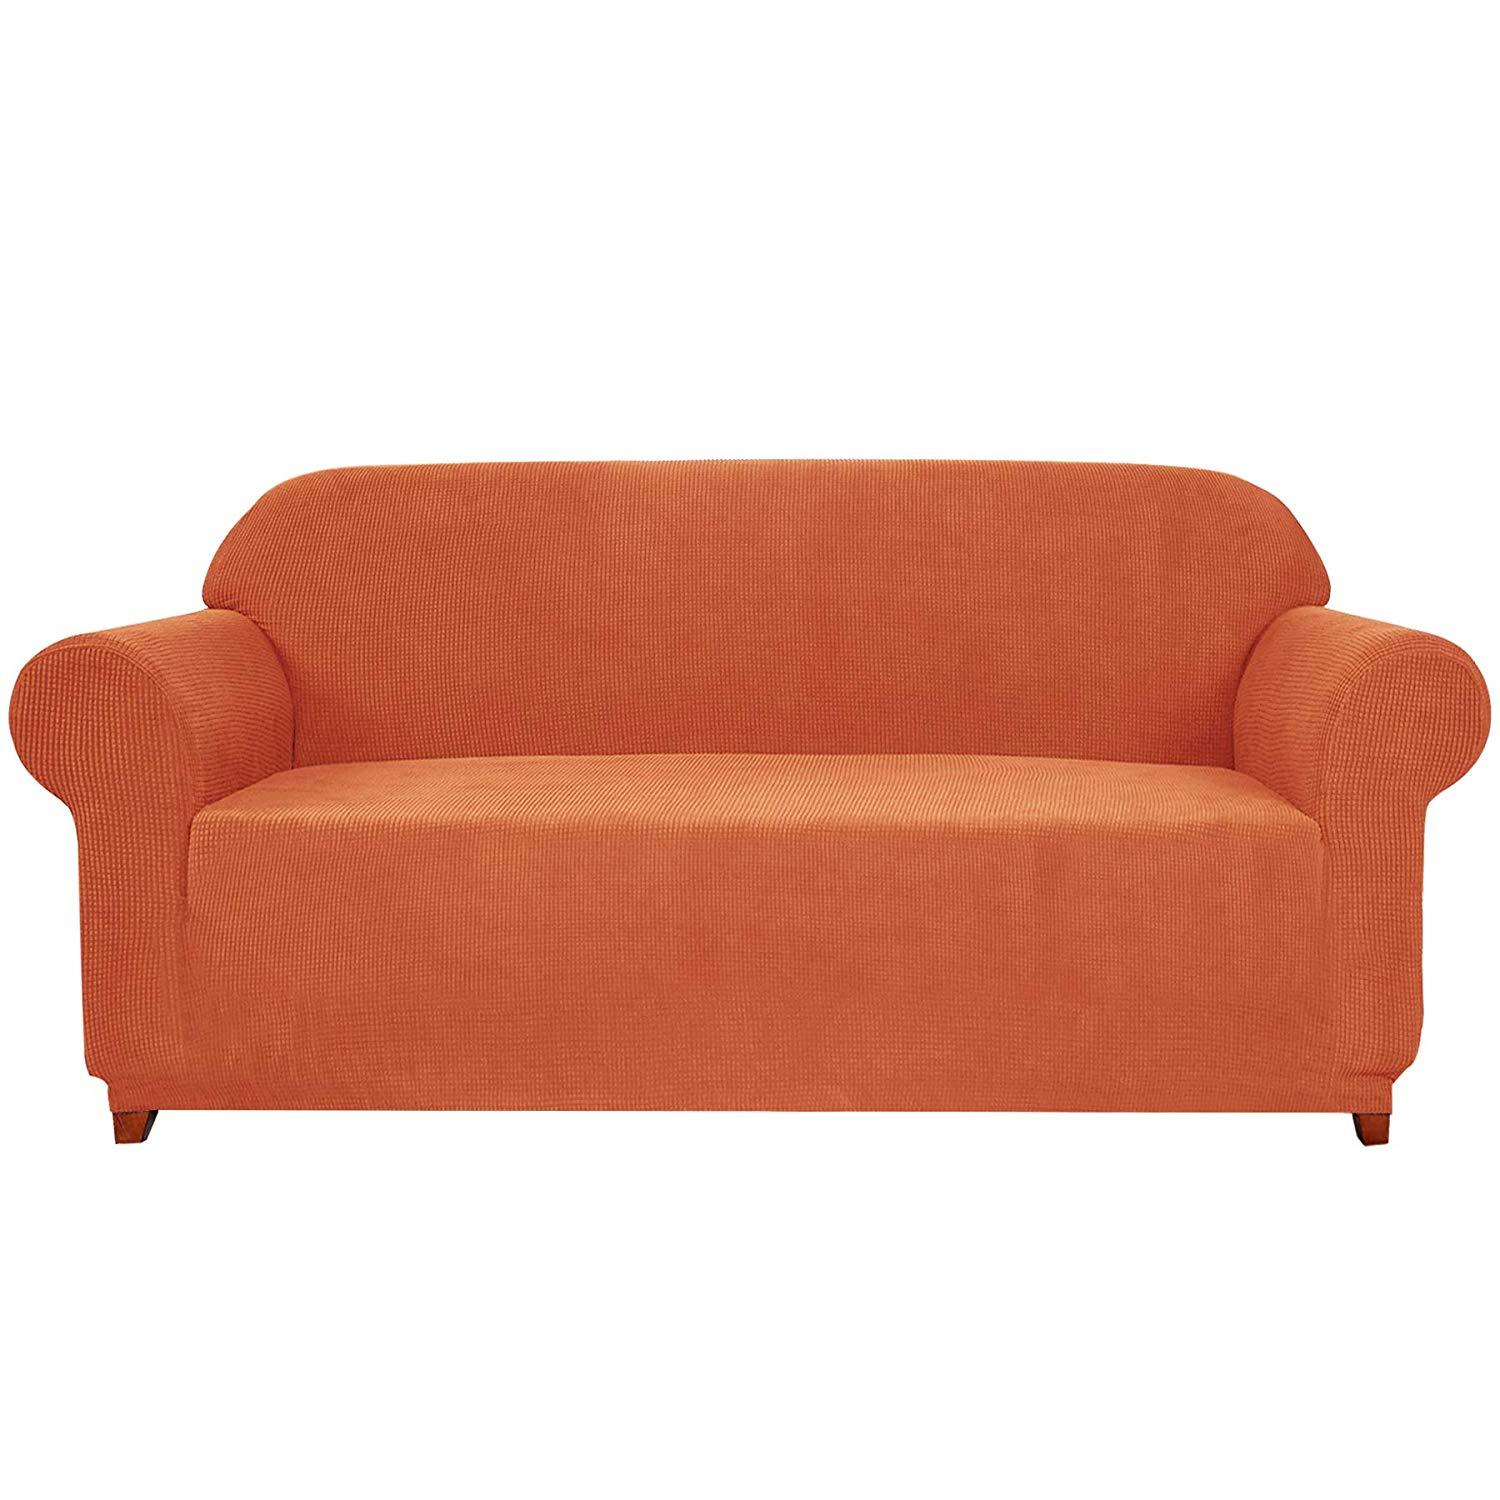 Loveseat / Orange Plaid Sofa / Orange Plaid X-Large / Orange Plaid